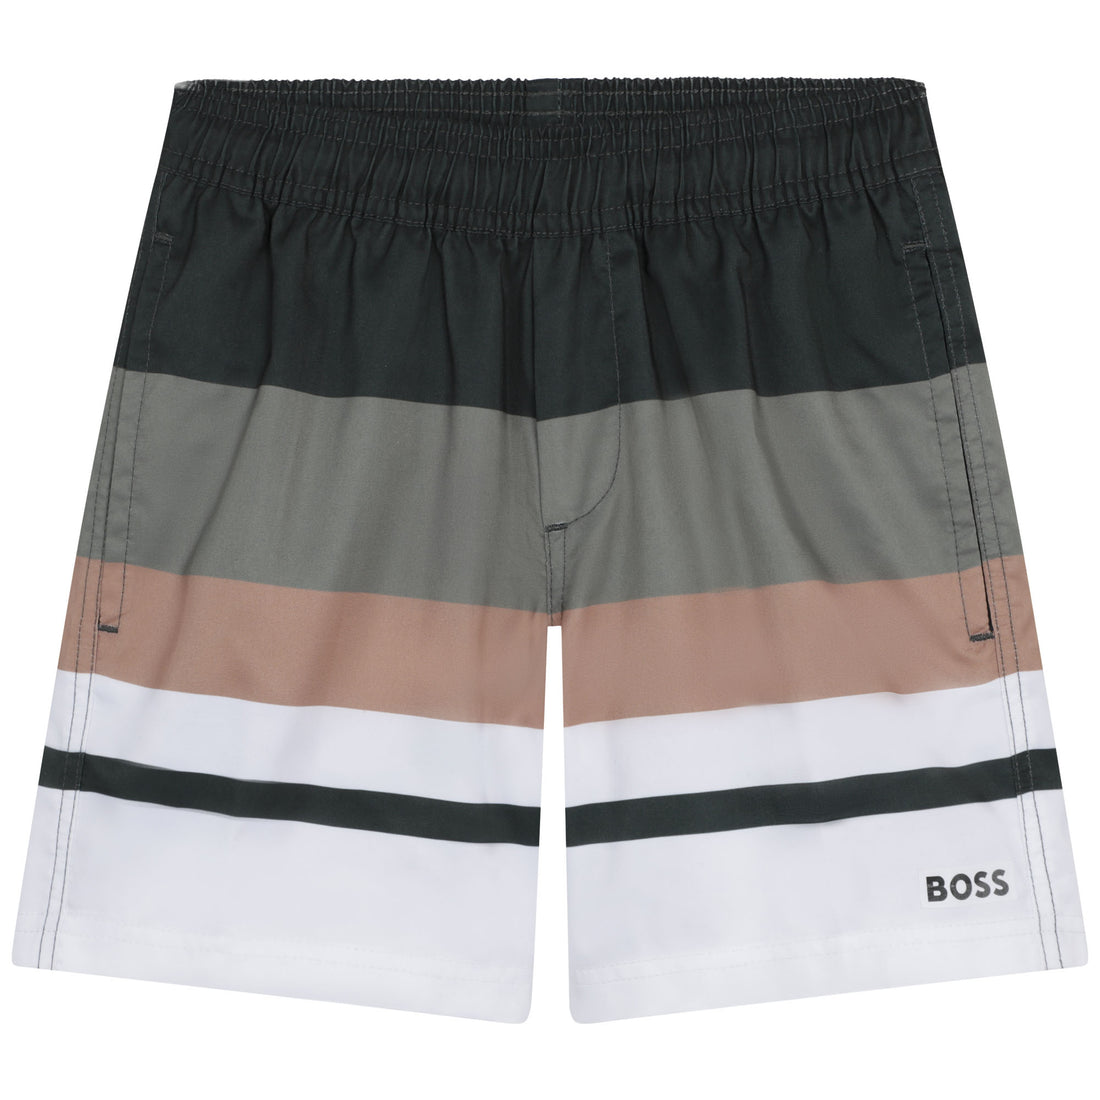 Hugo Boss Swim Shorts Style: J24849